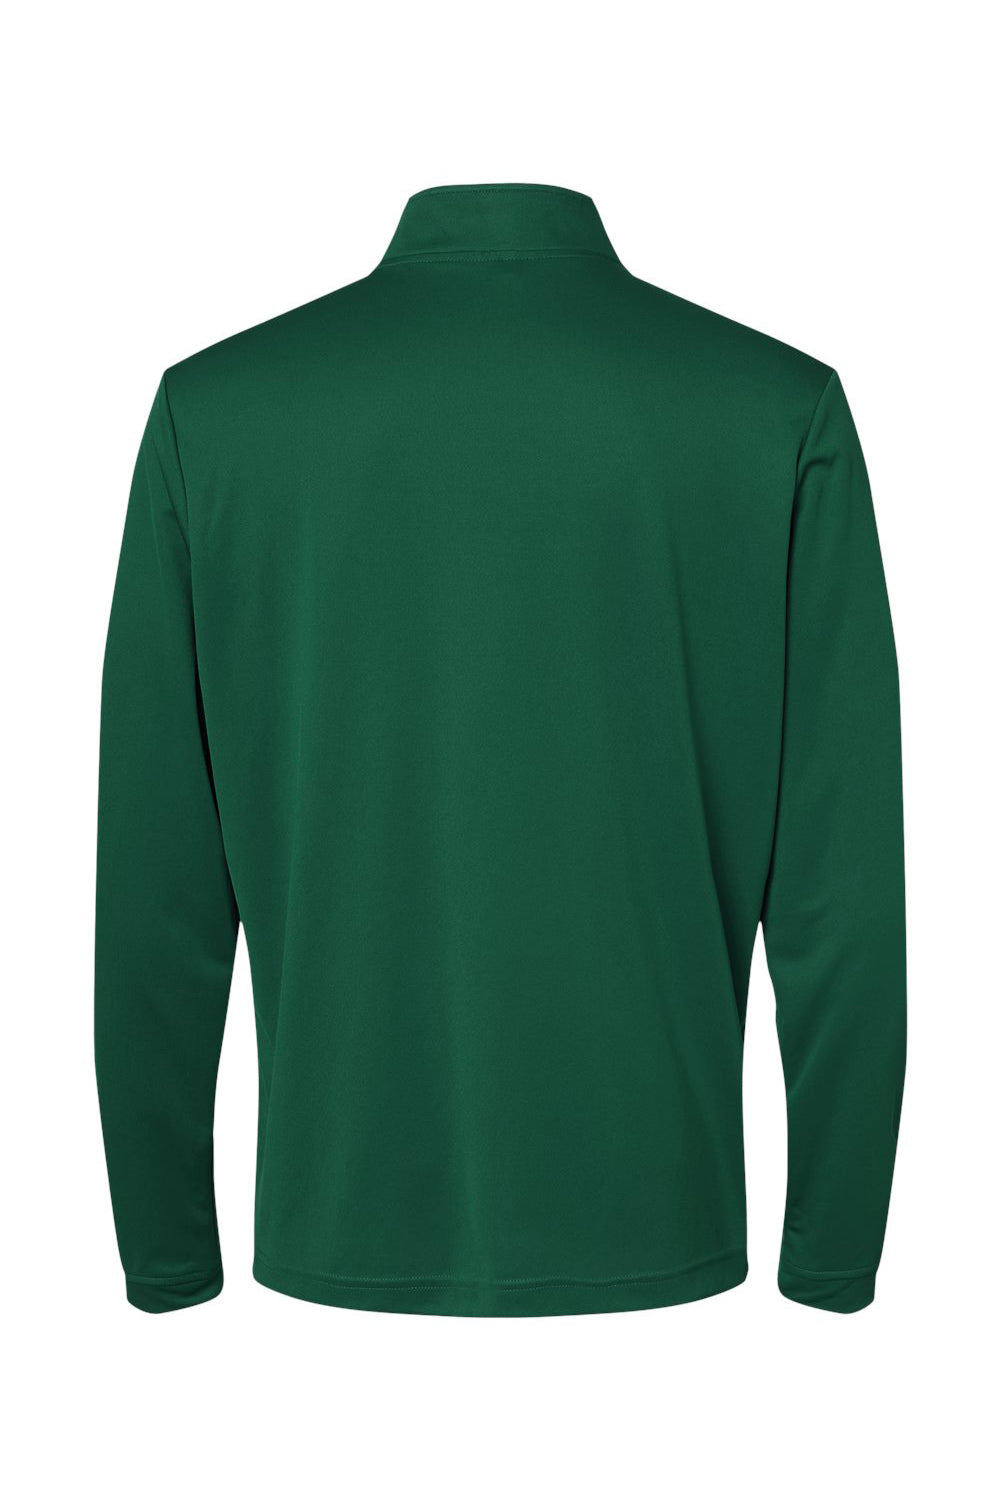 Adidas A401 Mens UPF 50+ 1/4 Zip Sweatshirt Collegiate Green Flat Back